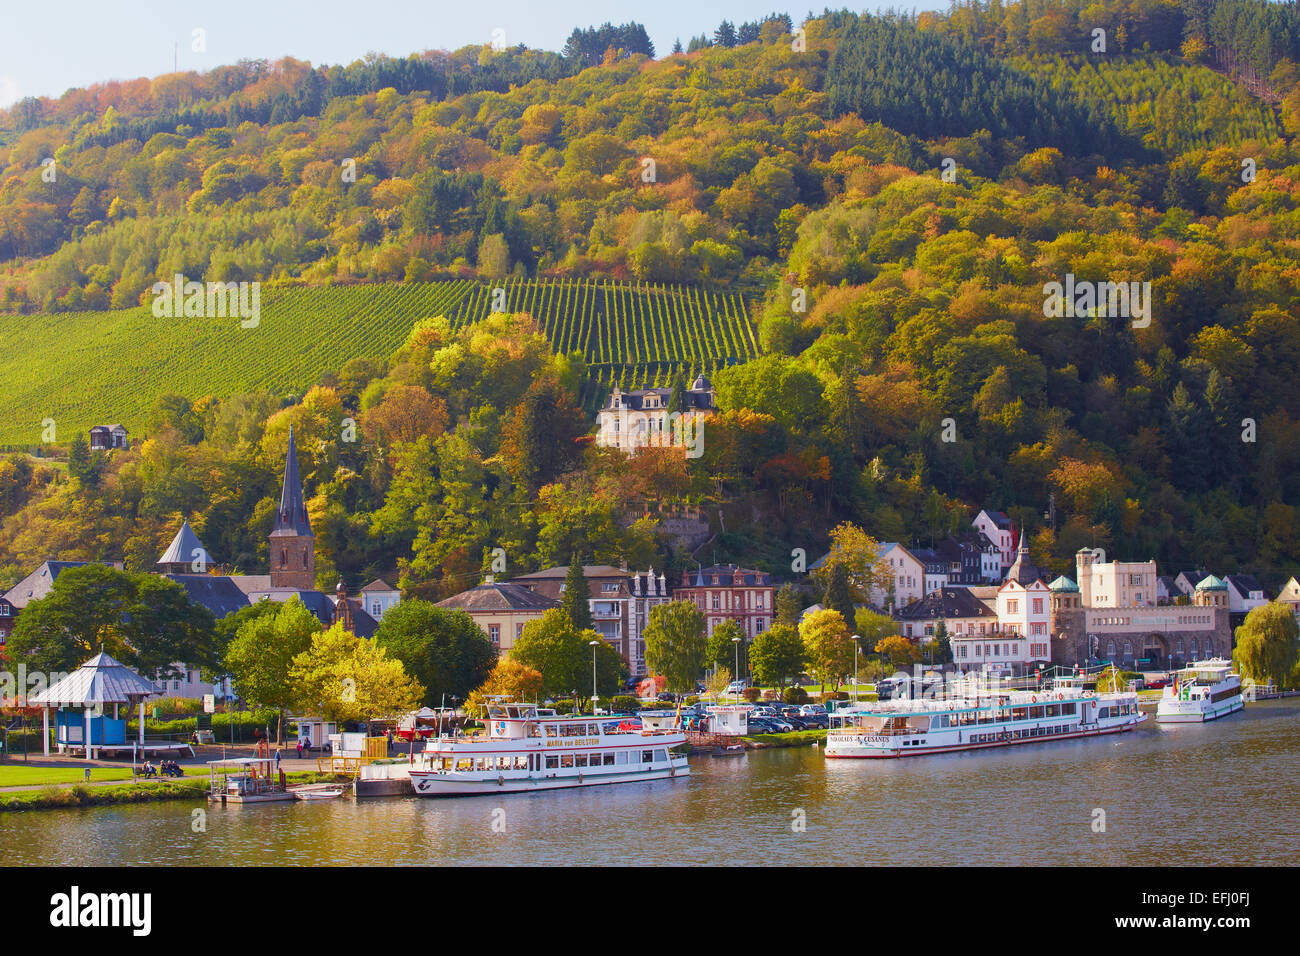 View of Trarbach, Traben-Trarbach, Mosel, Rhineland-Palatinate, Germany, Europe Stock Photo